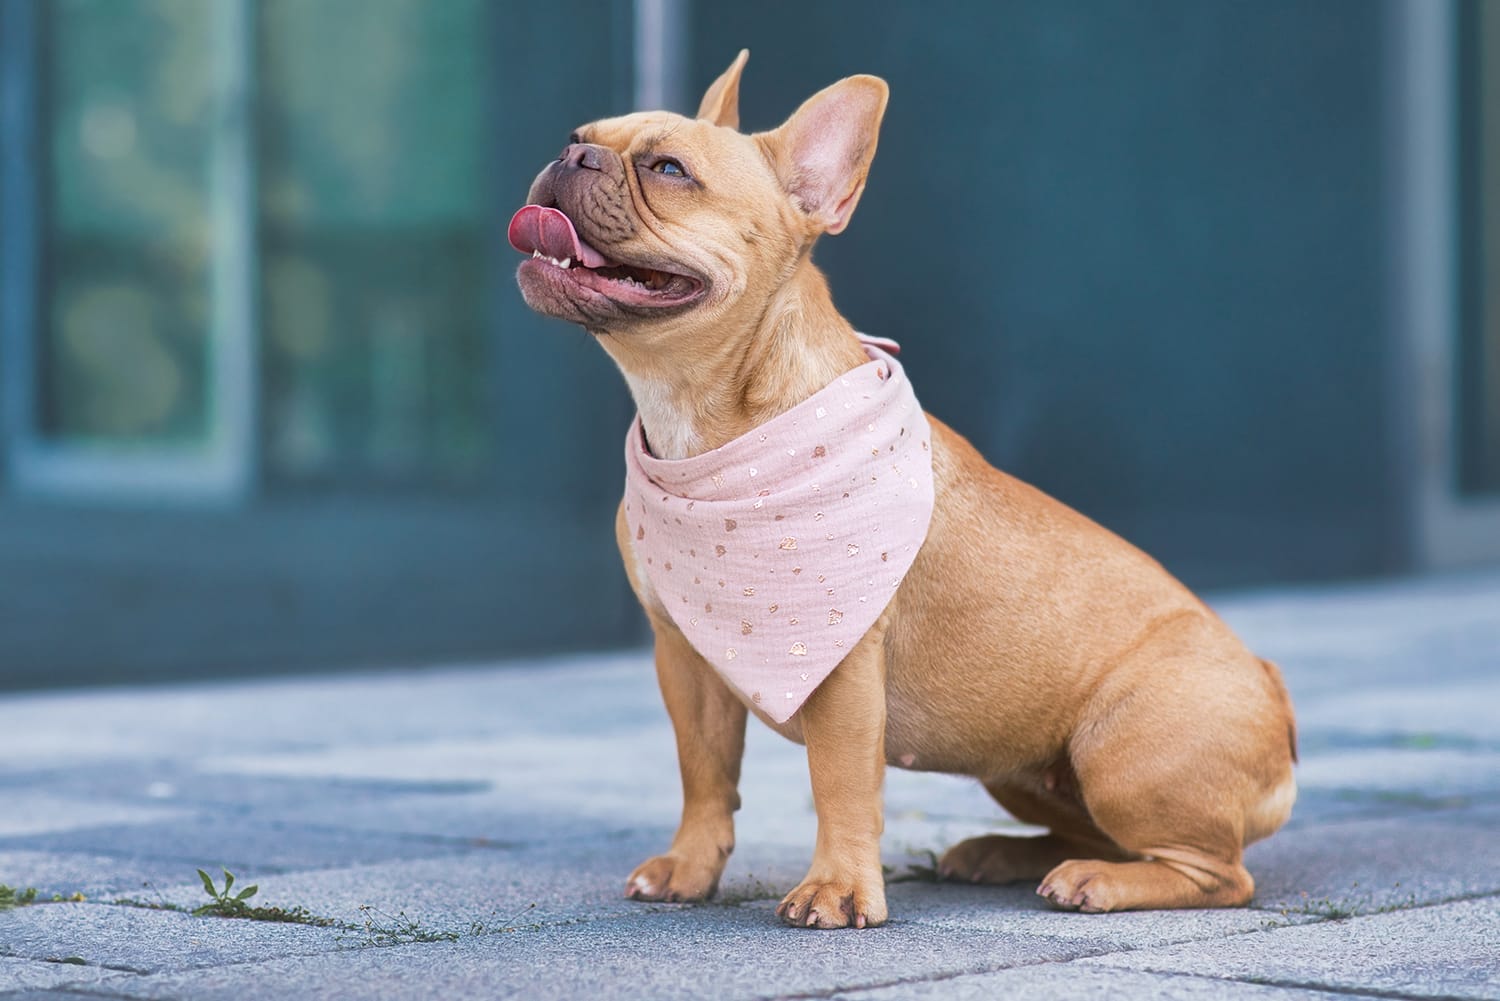 French bulldog with pink bandana, sitting on pavement, looking happy, panting.